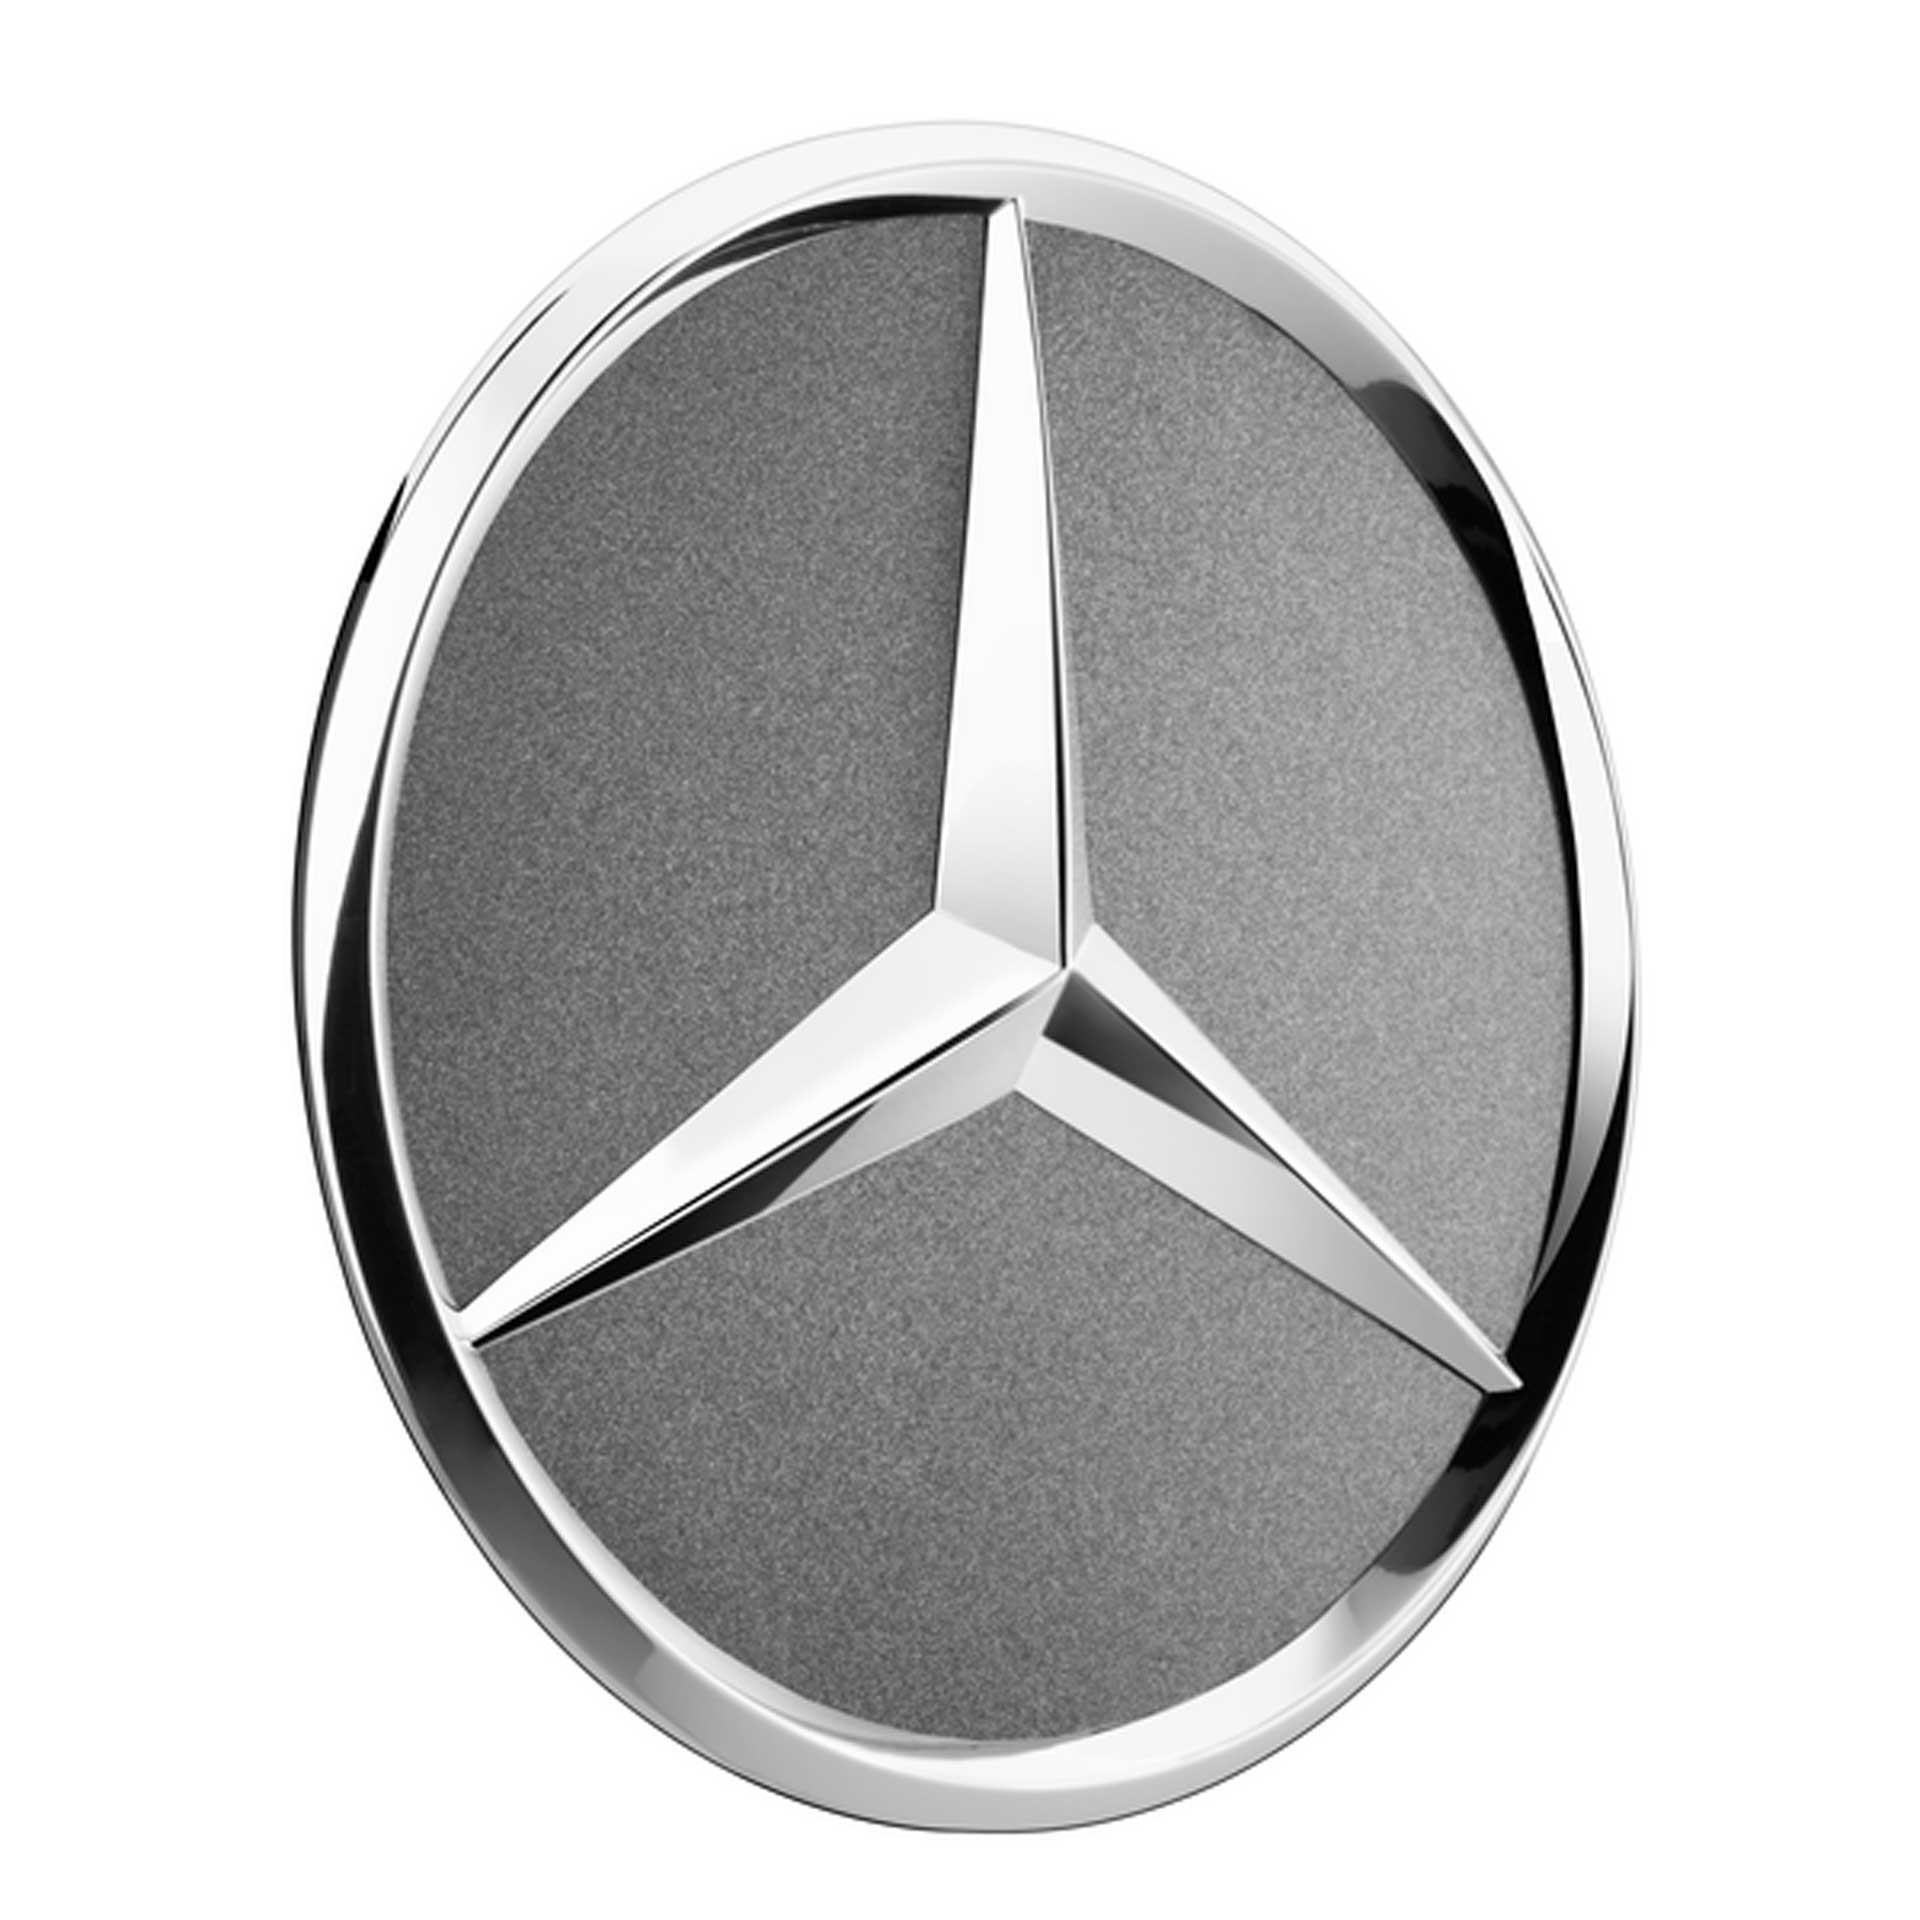 Mercedes-Benz Radnabenabdeckung Stern grau Himalaya